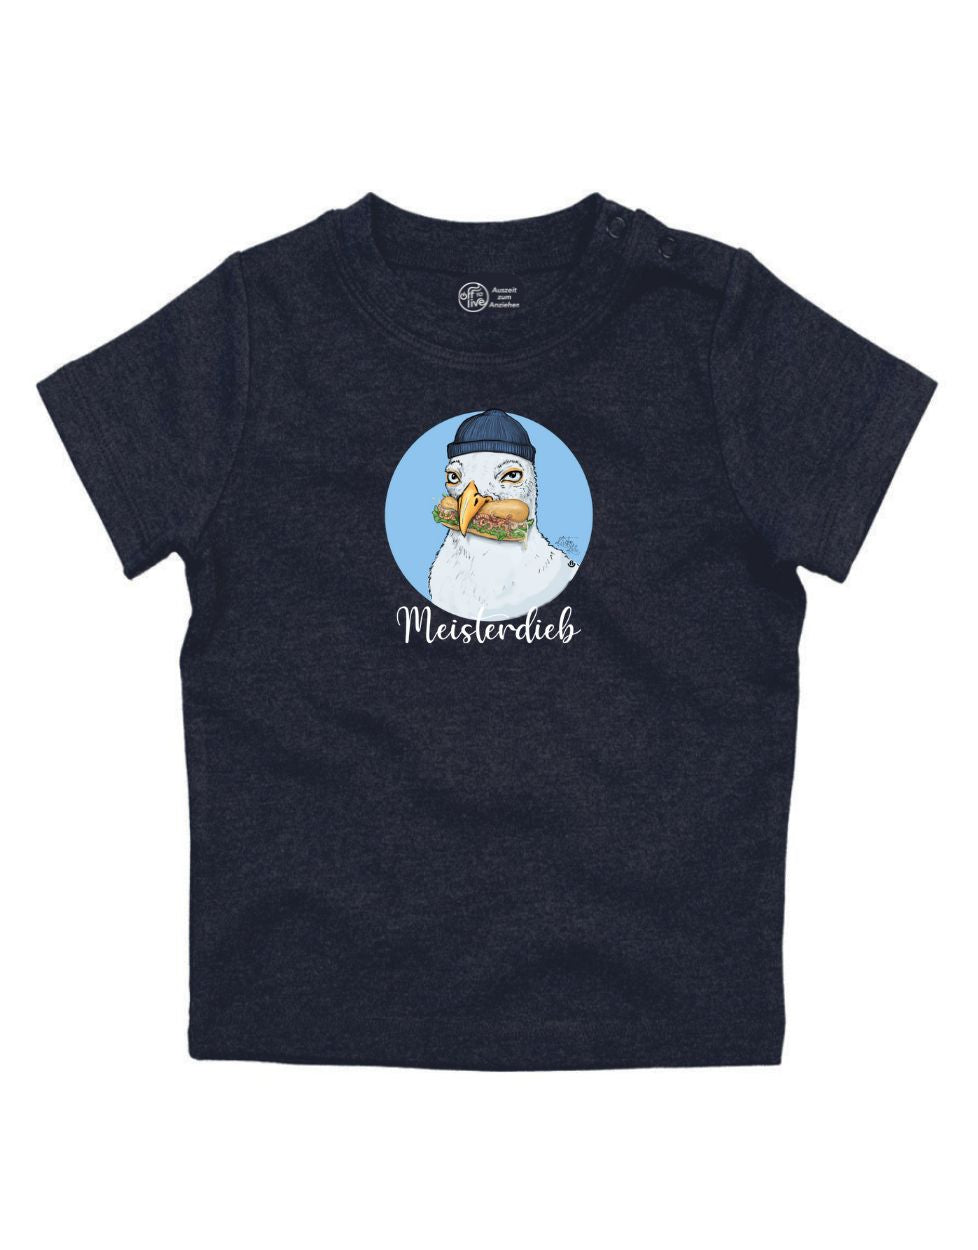 Meistedieb Baby T-Shirt